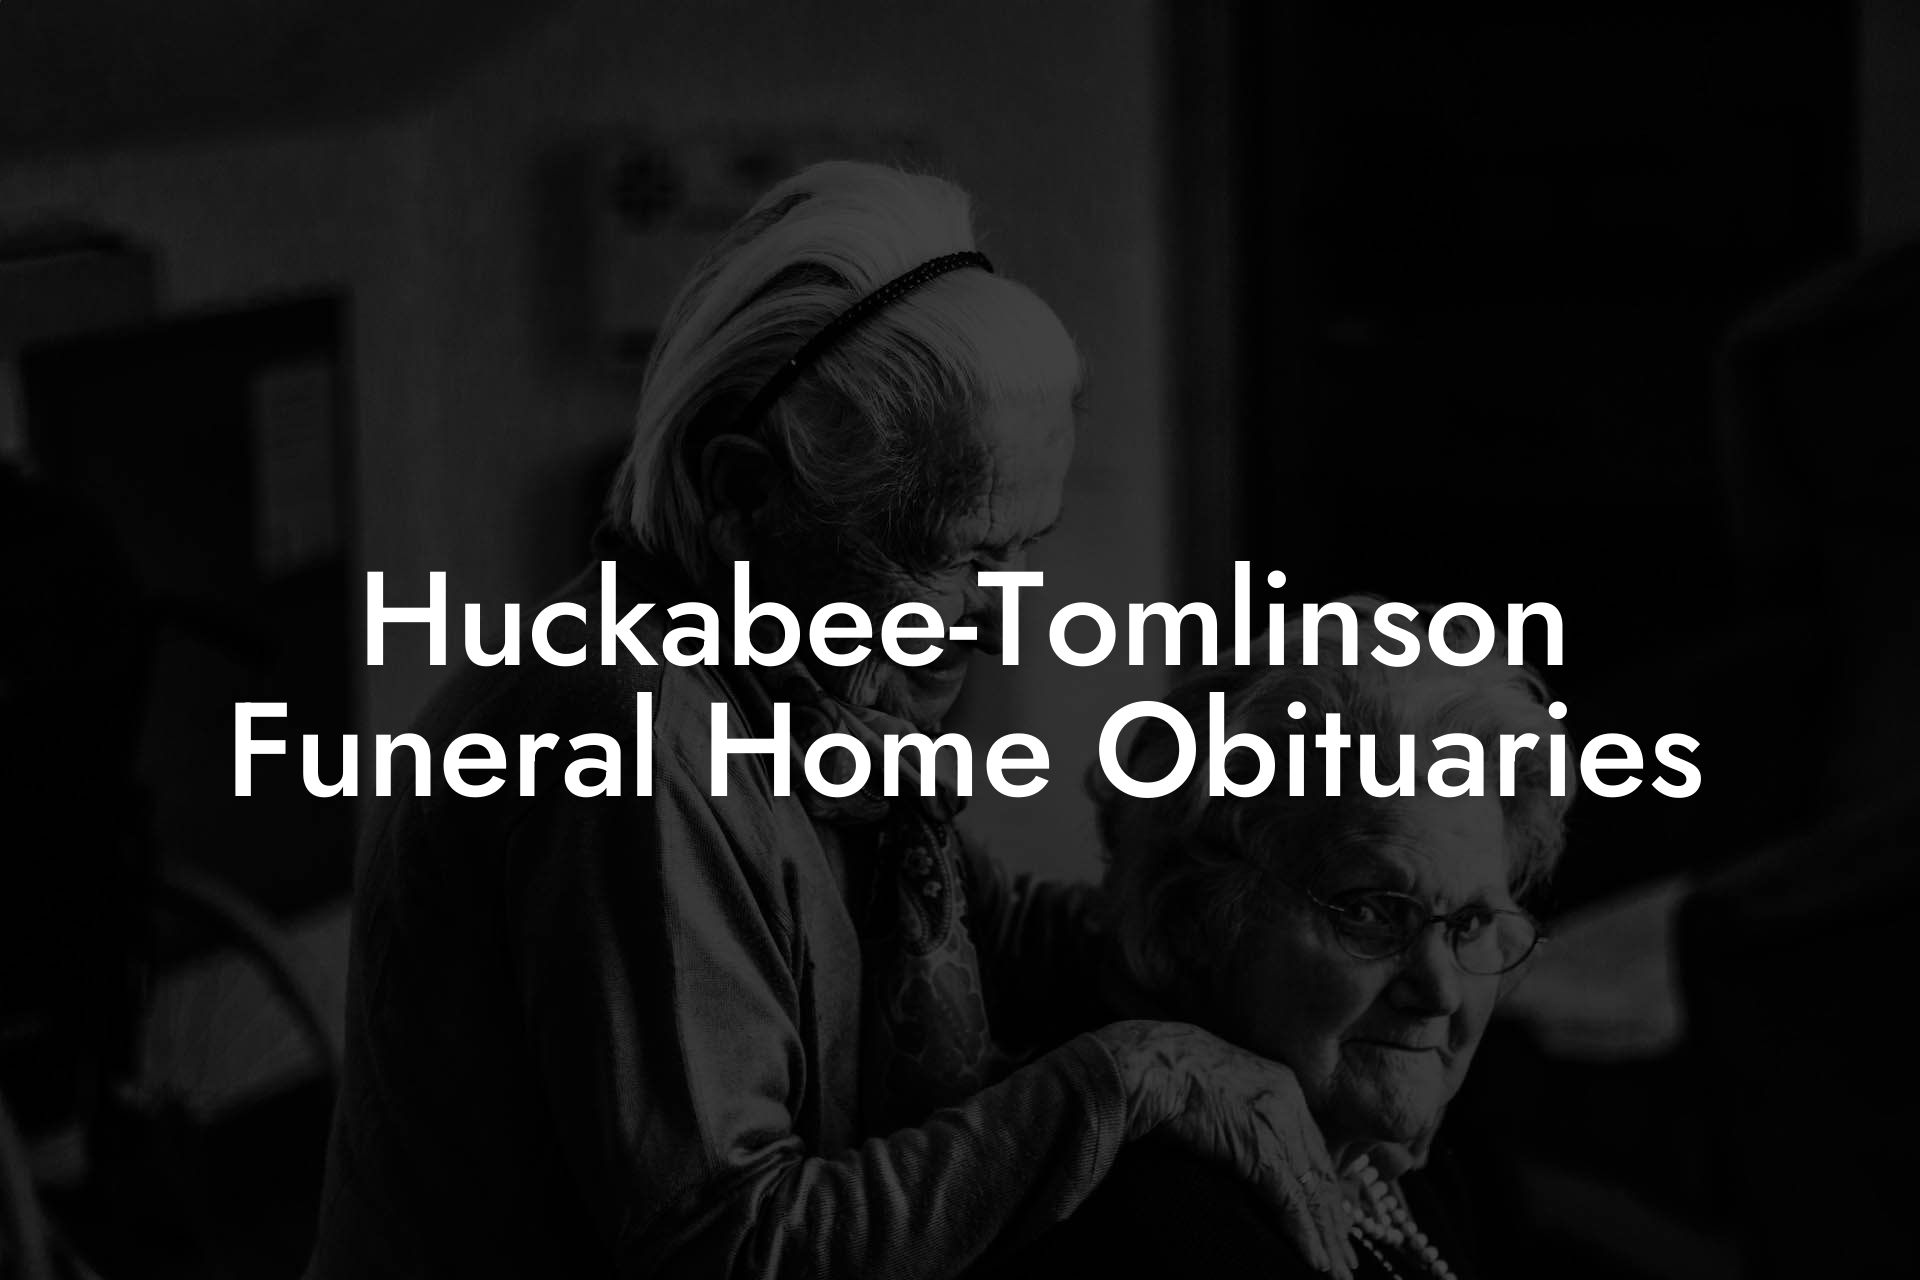 Huckabee-Tomlinson Funeral Home Obituaries